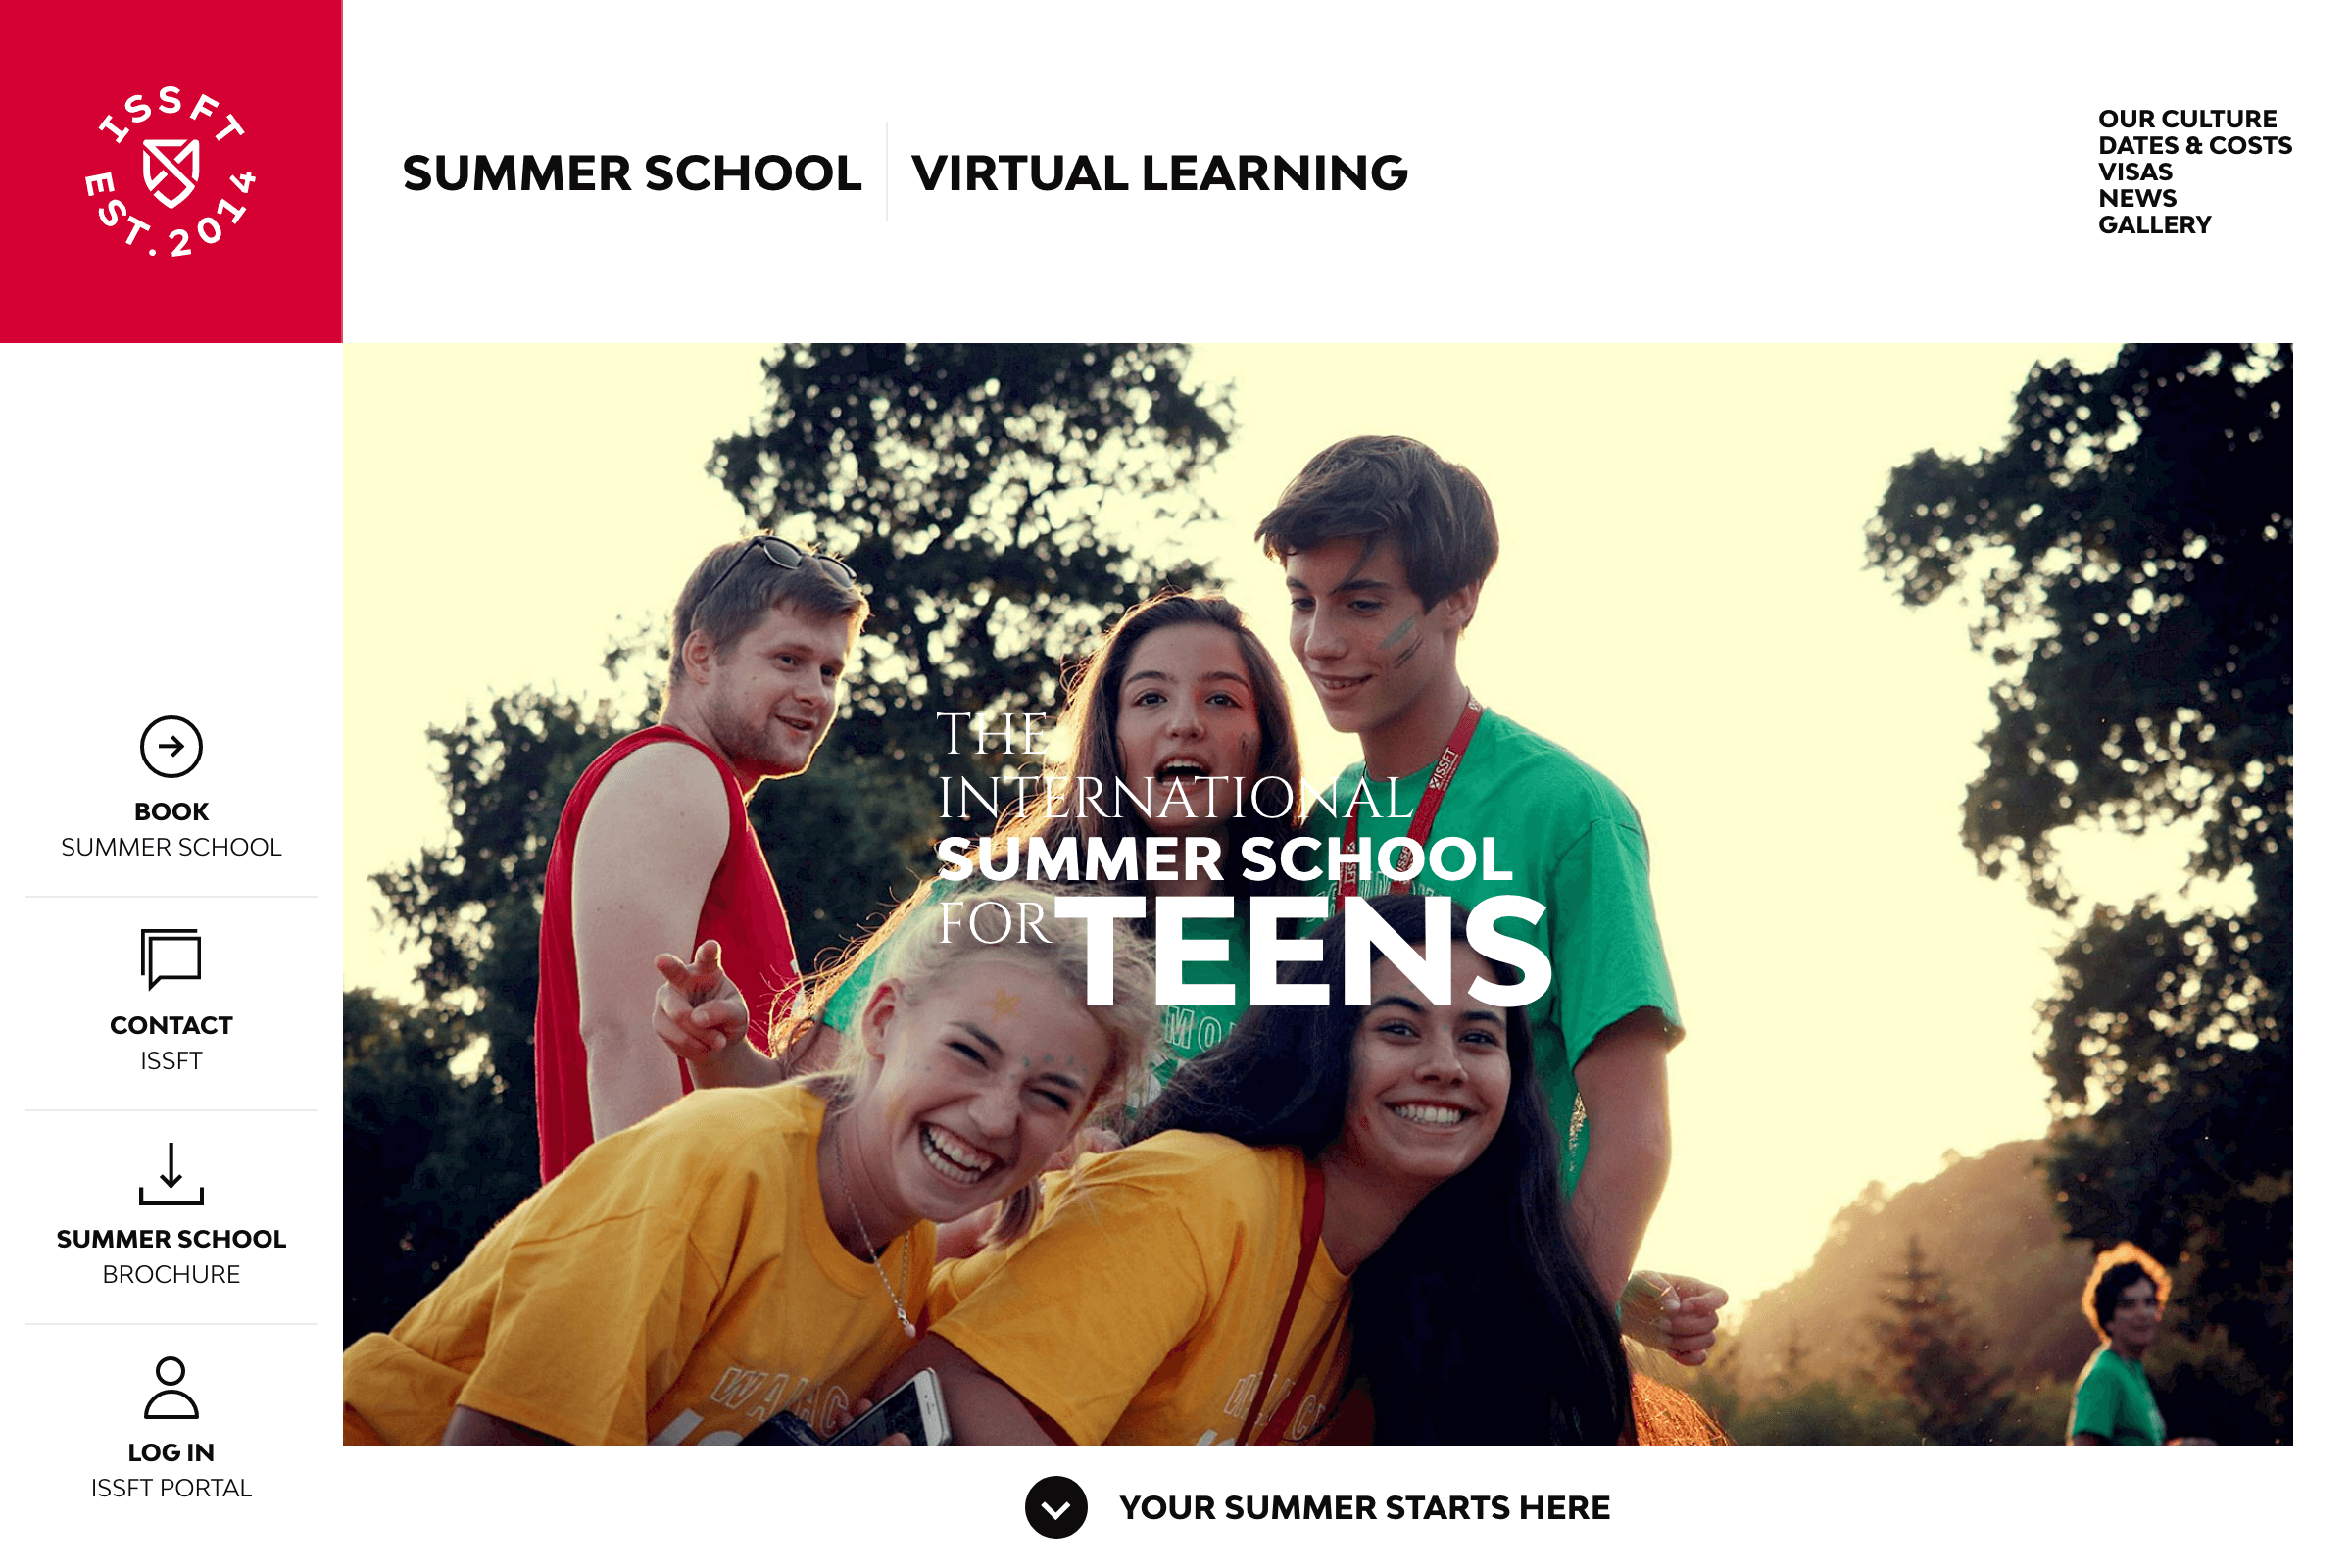 The International Summer School for Teens